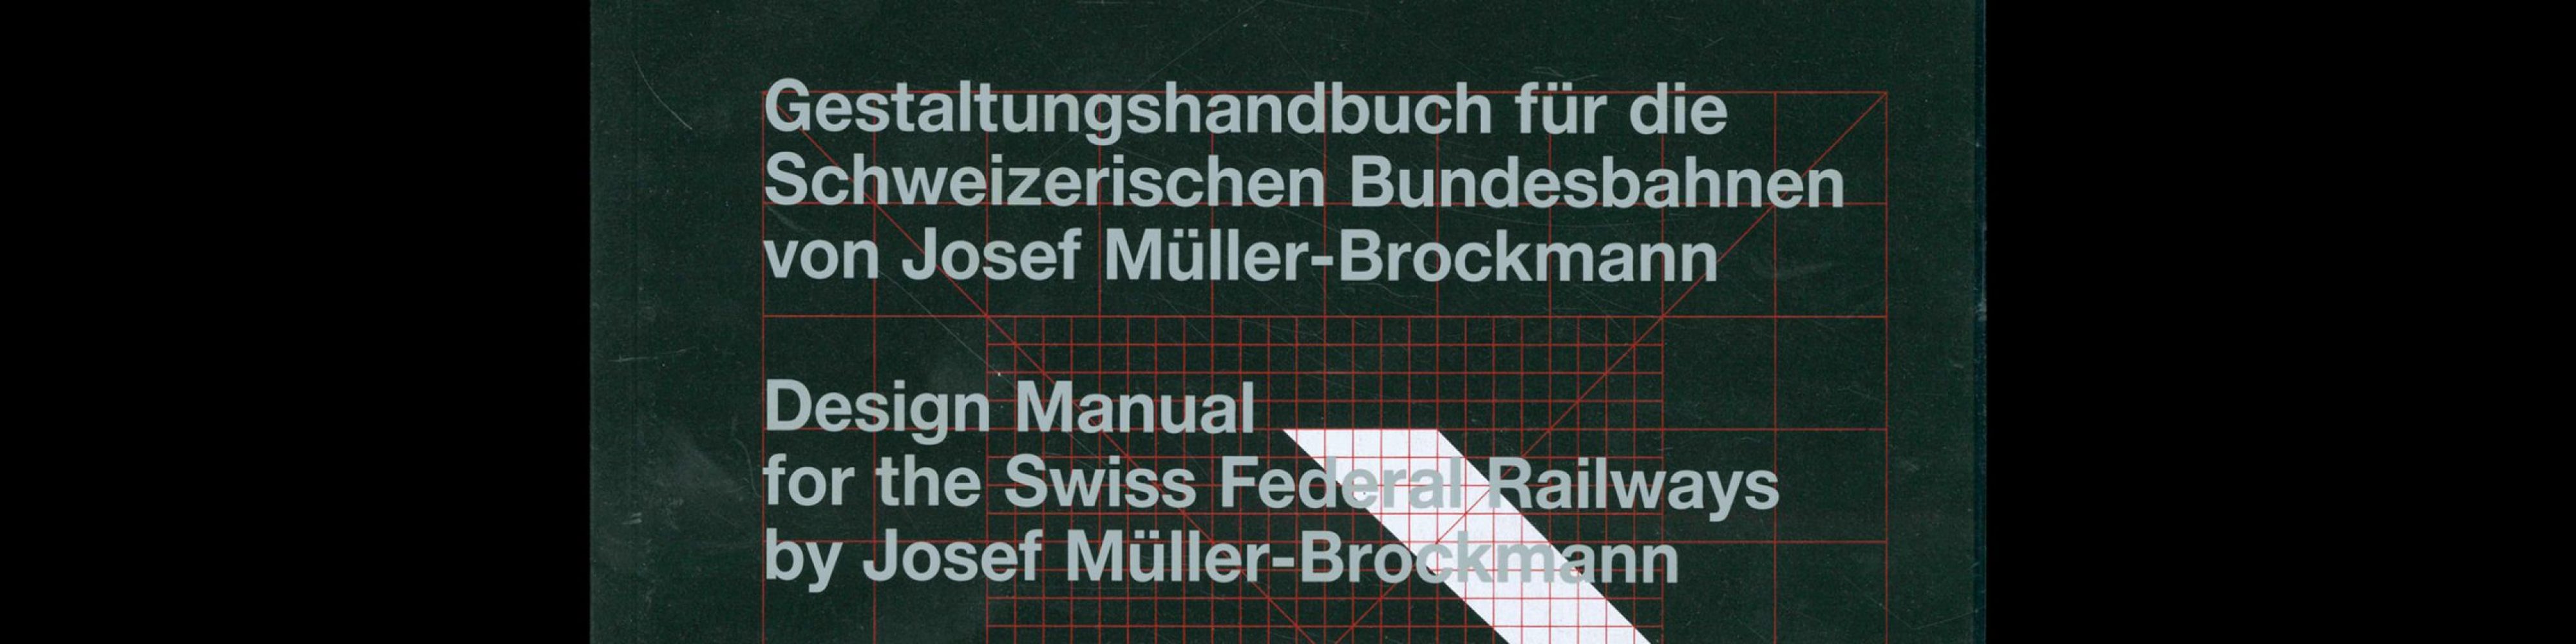 Design Manual for the Swiss Federal Railways,Josef Müller-Brockmann, 2019